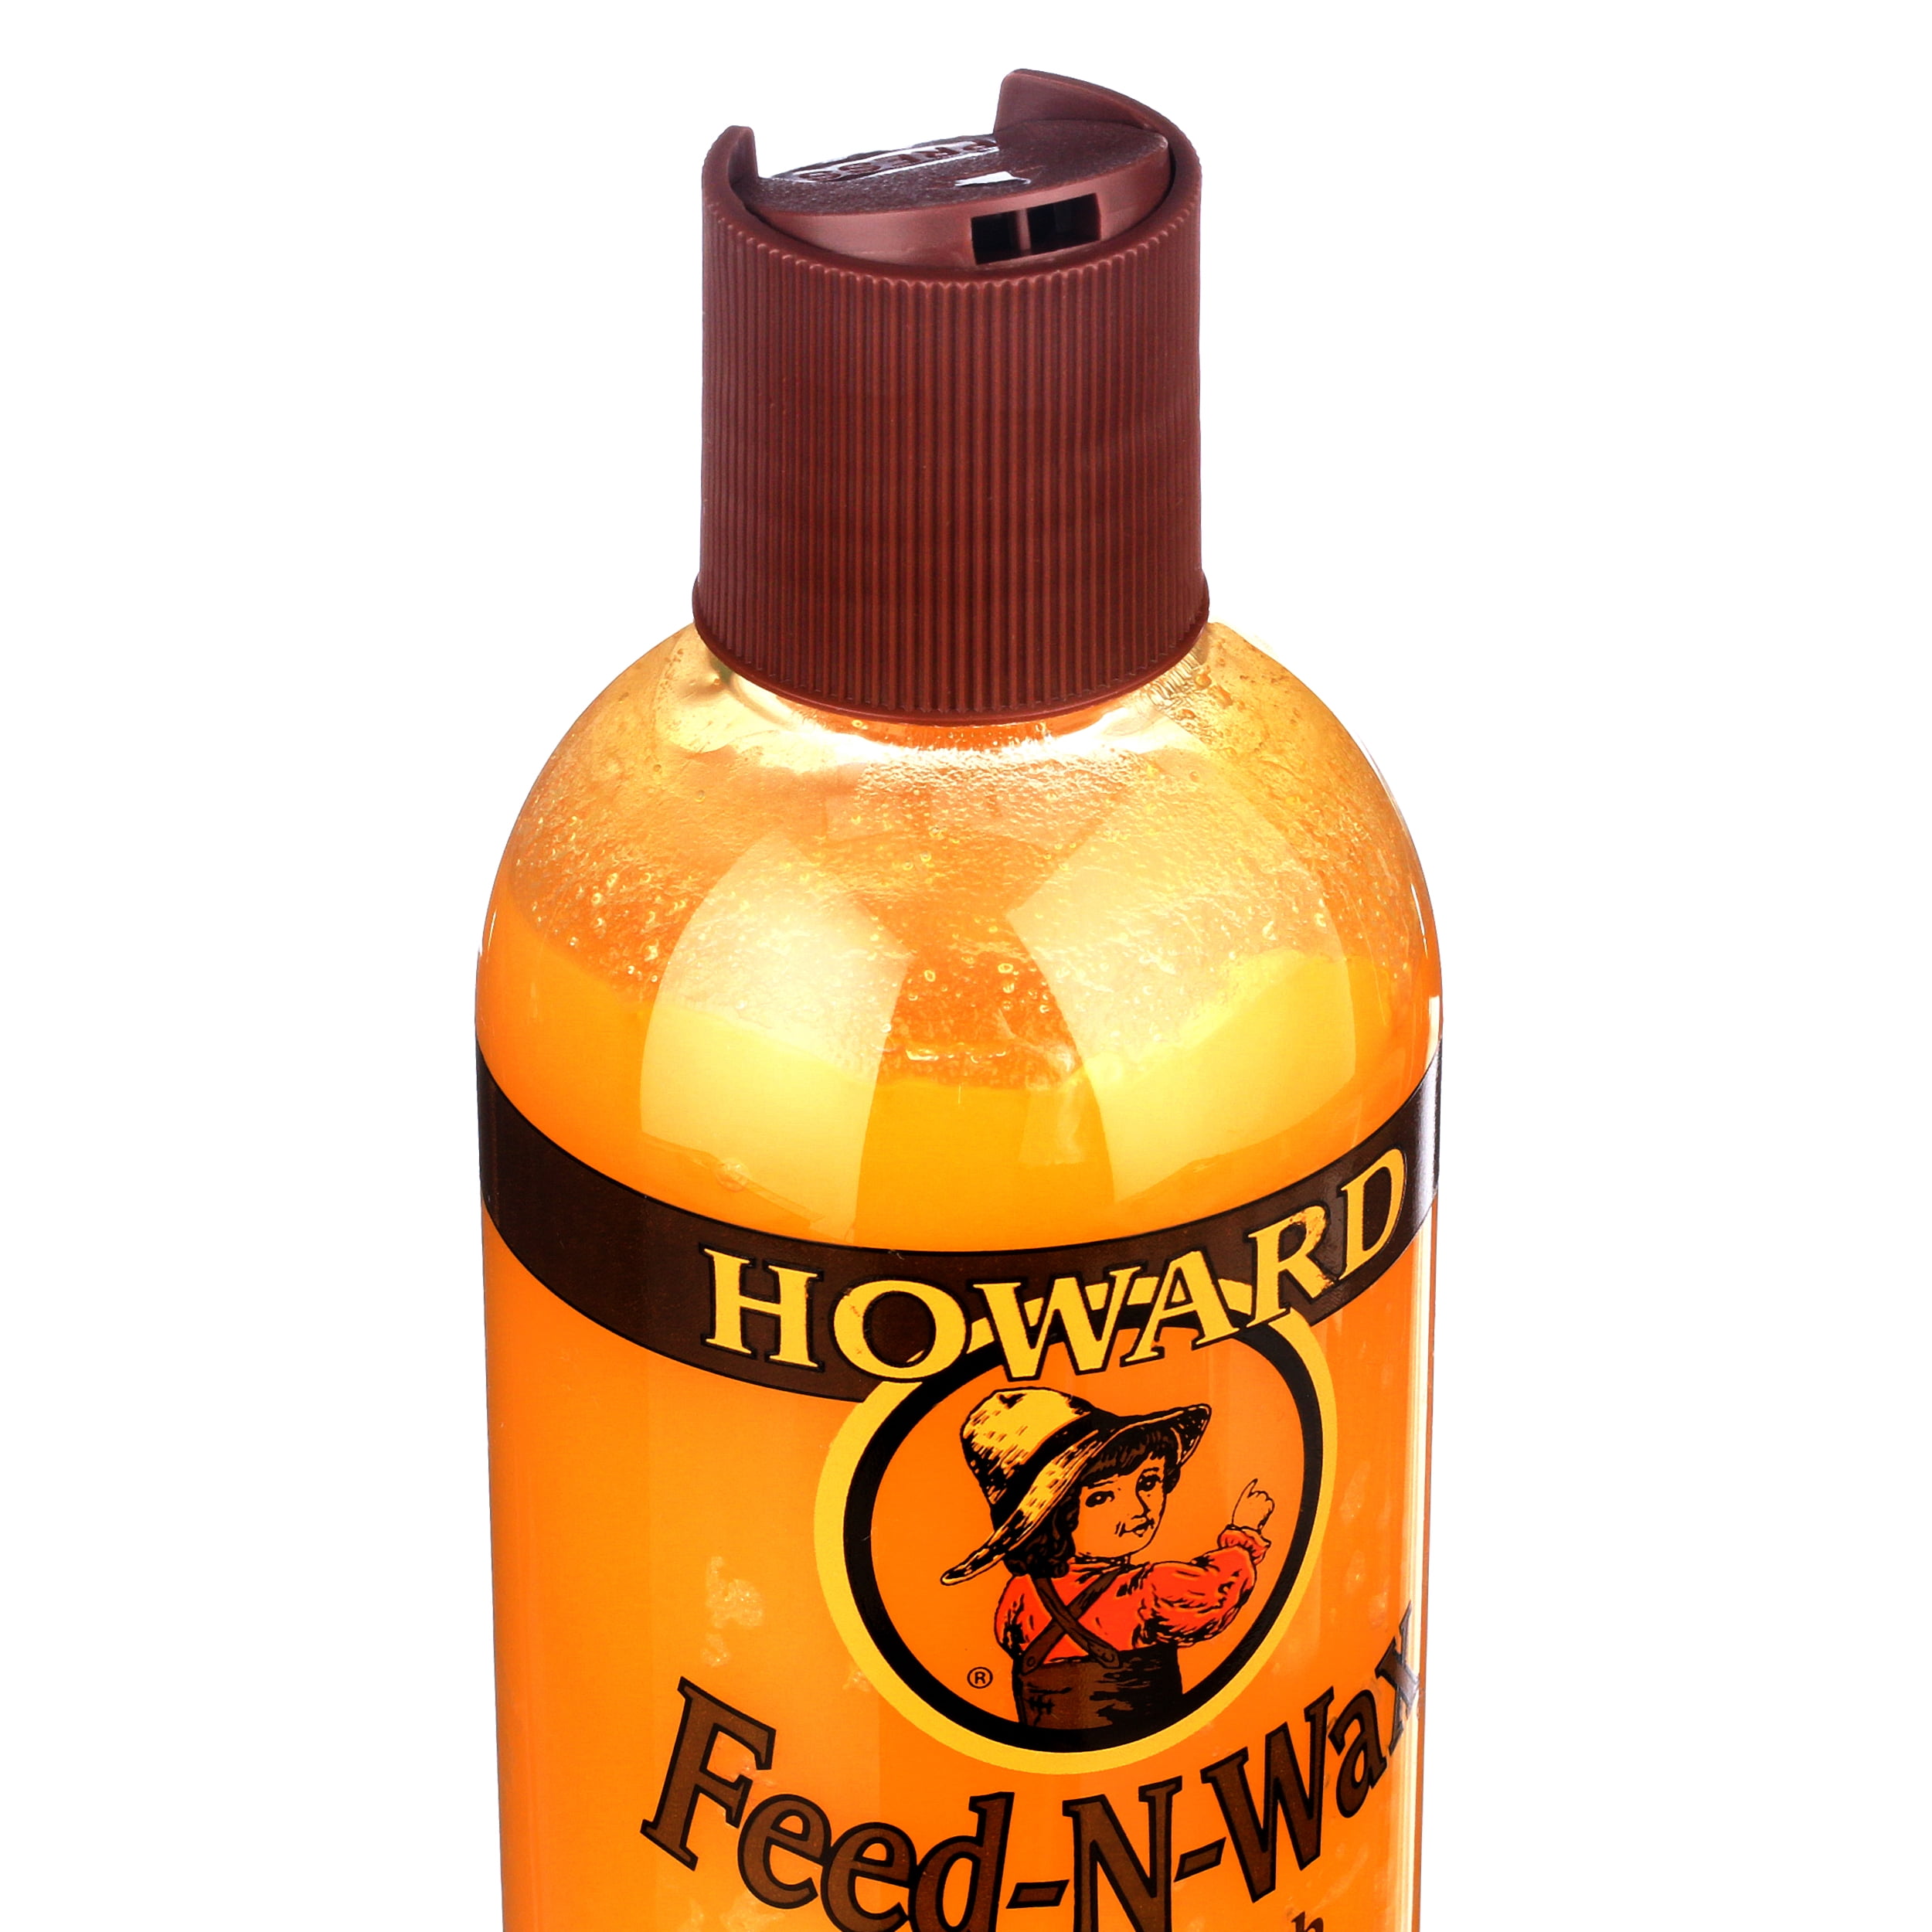 Howard Feed-N-Wax Fretboard Oil